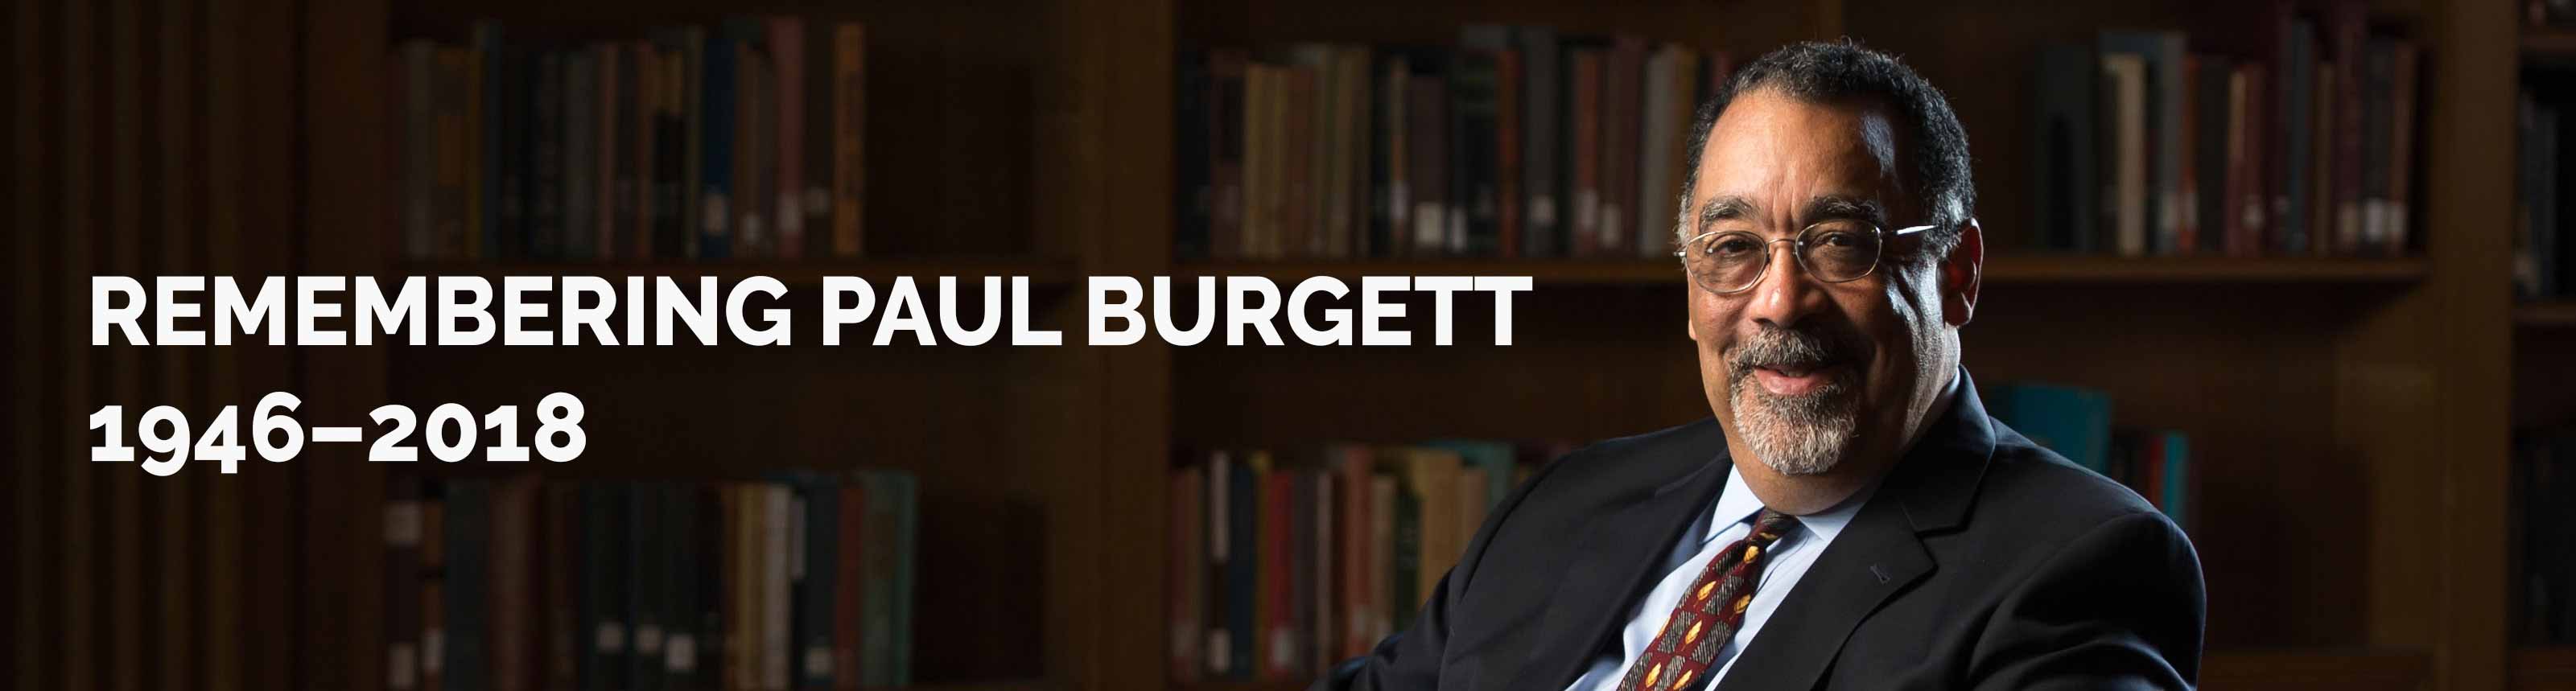 portrait of Paul Burgett with the text REMEMBERING PAUL BURGETT 